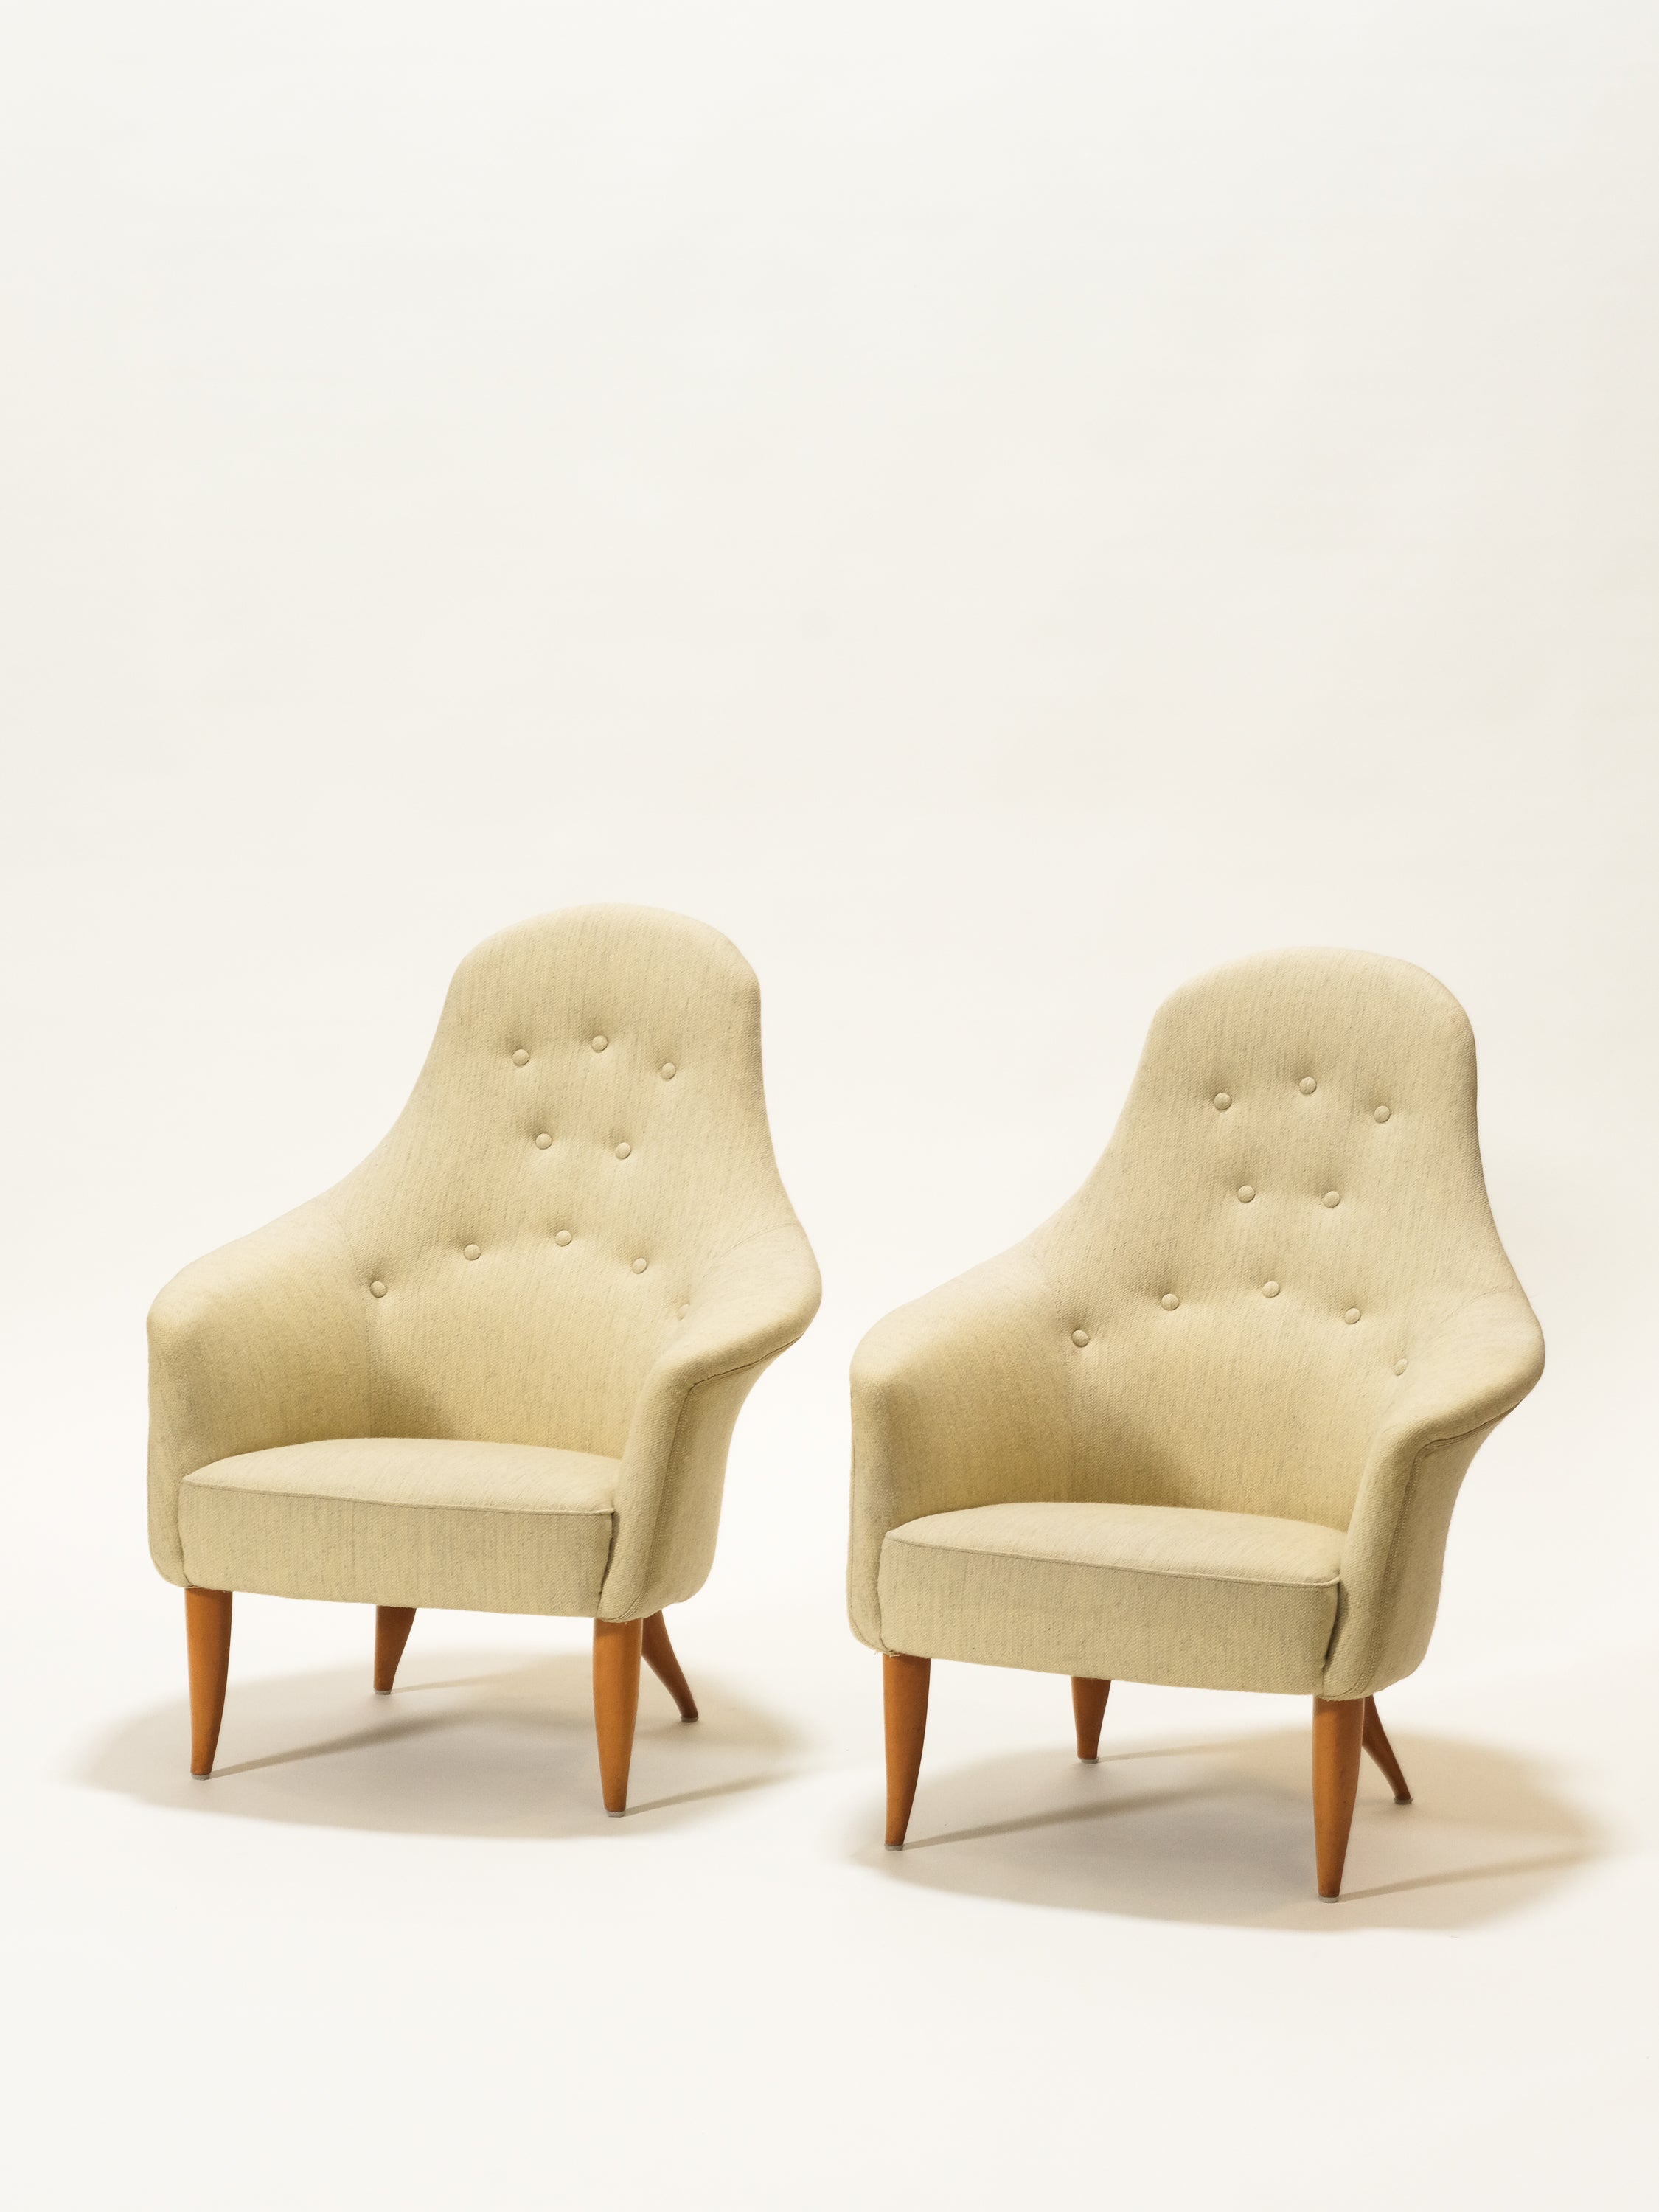 Pair of "Stora Adam" Easy Chairs by Kerstin Hörlin-Holmquist for Nordiska Kompaniet, Sweden, 1950s